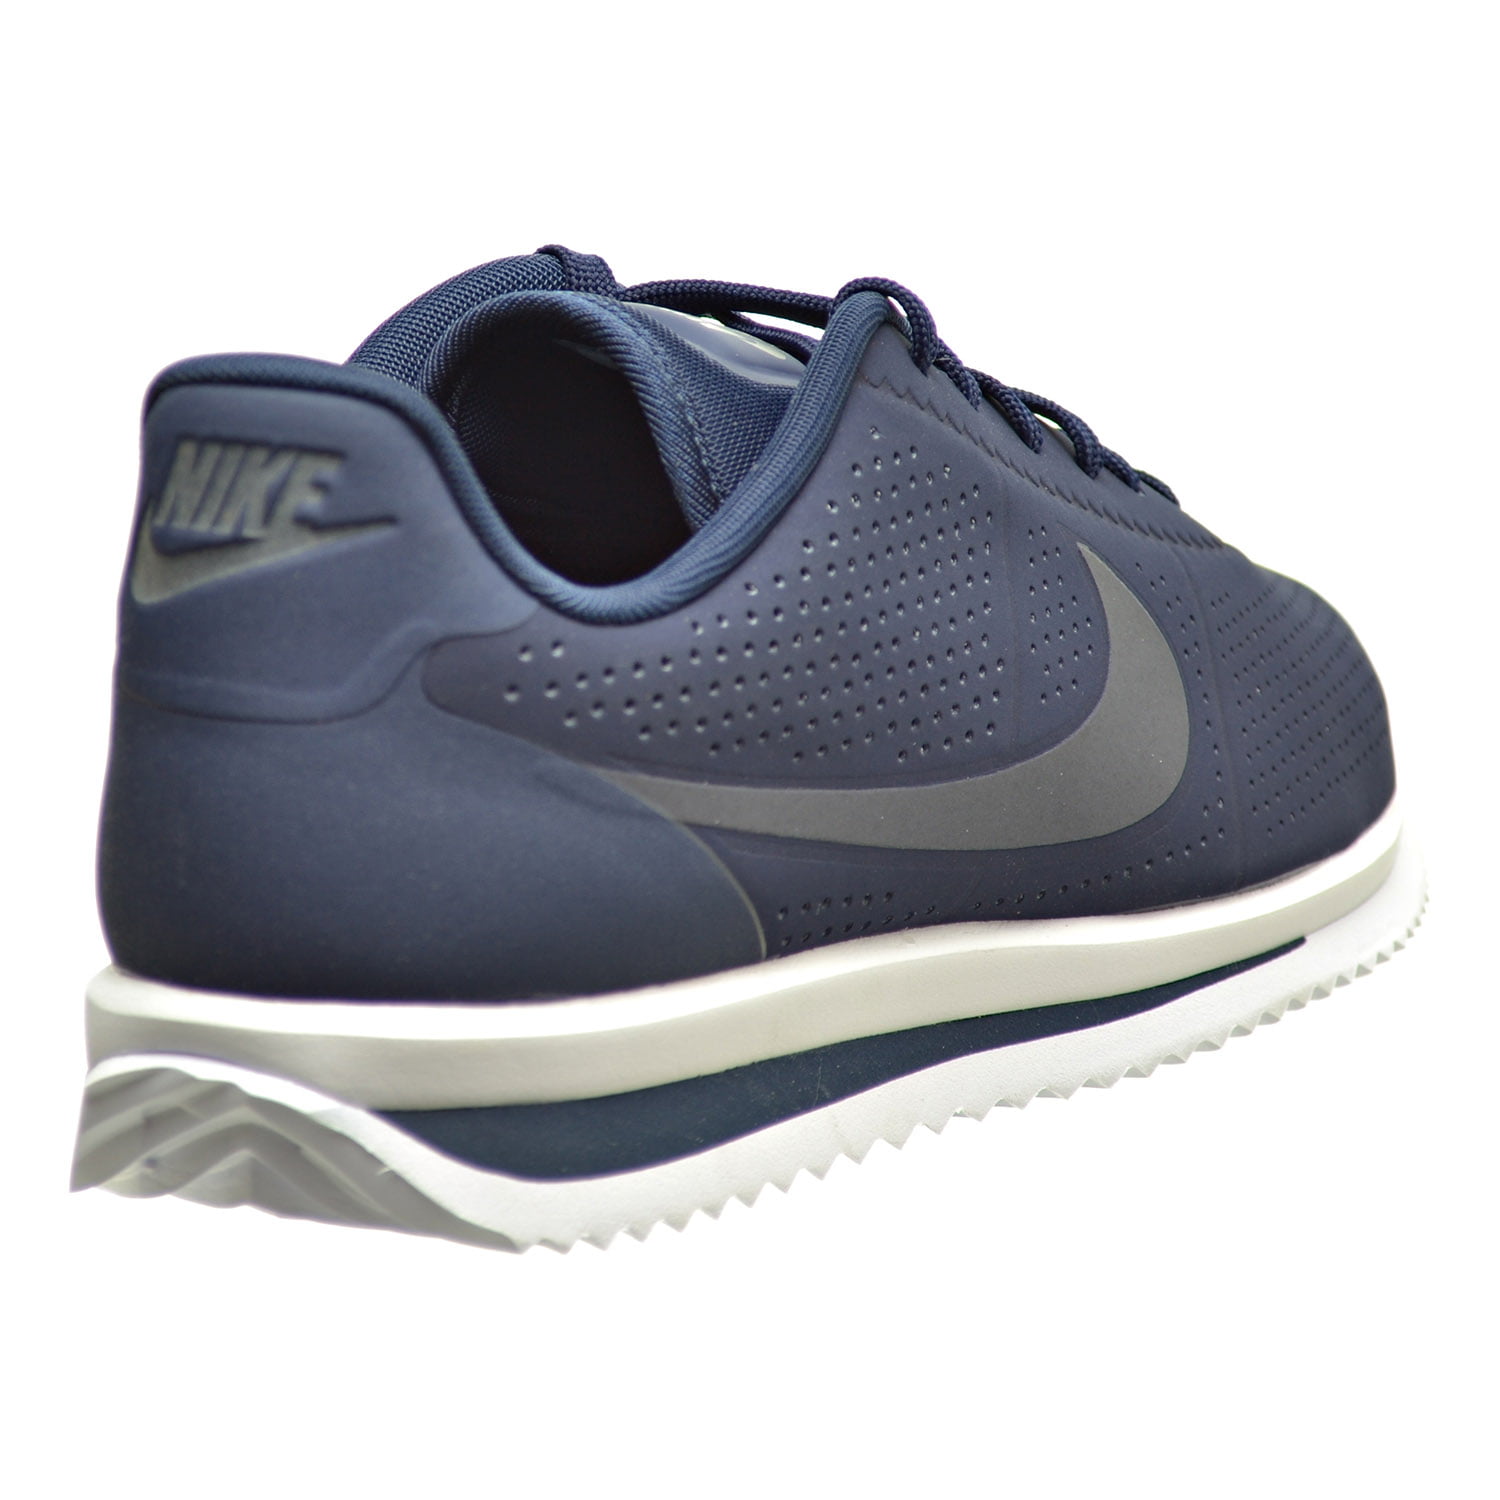 Nike Cortez Ultra Moire Men's Shoes Obsidian/Obsidian/White 845013-401 D(M) US) -